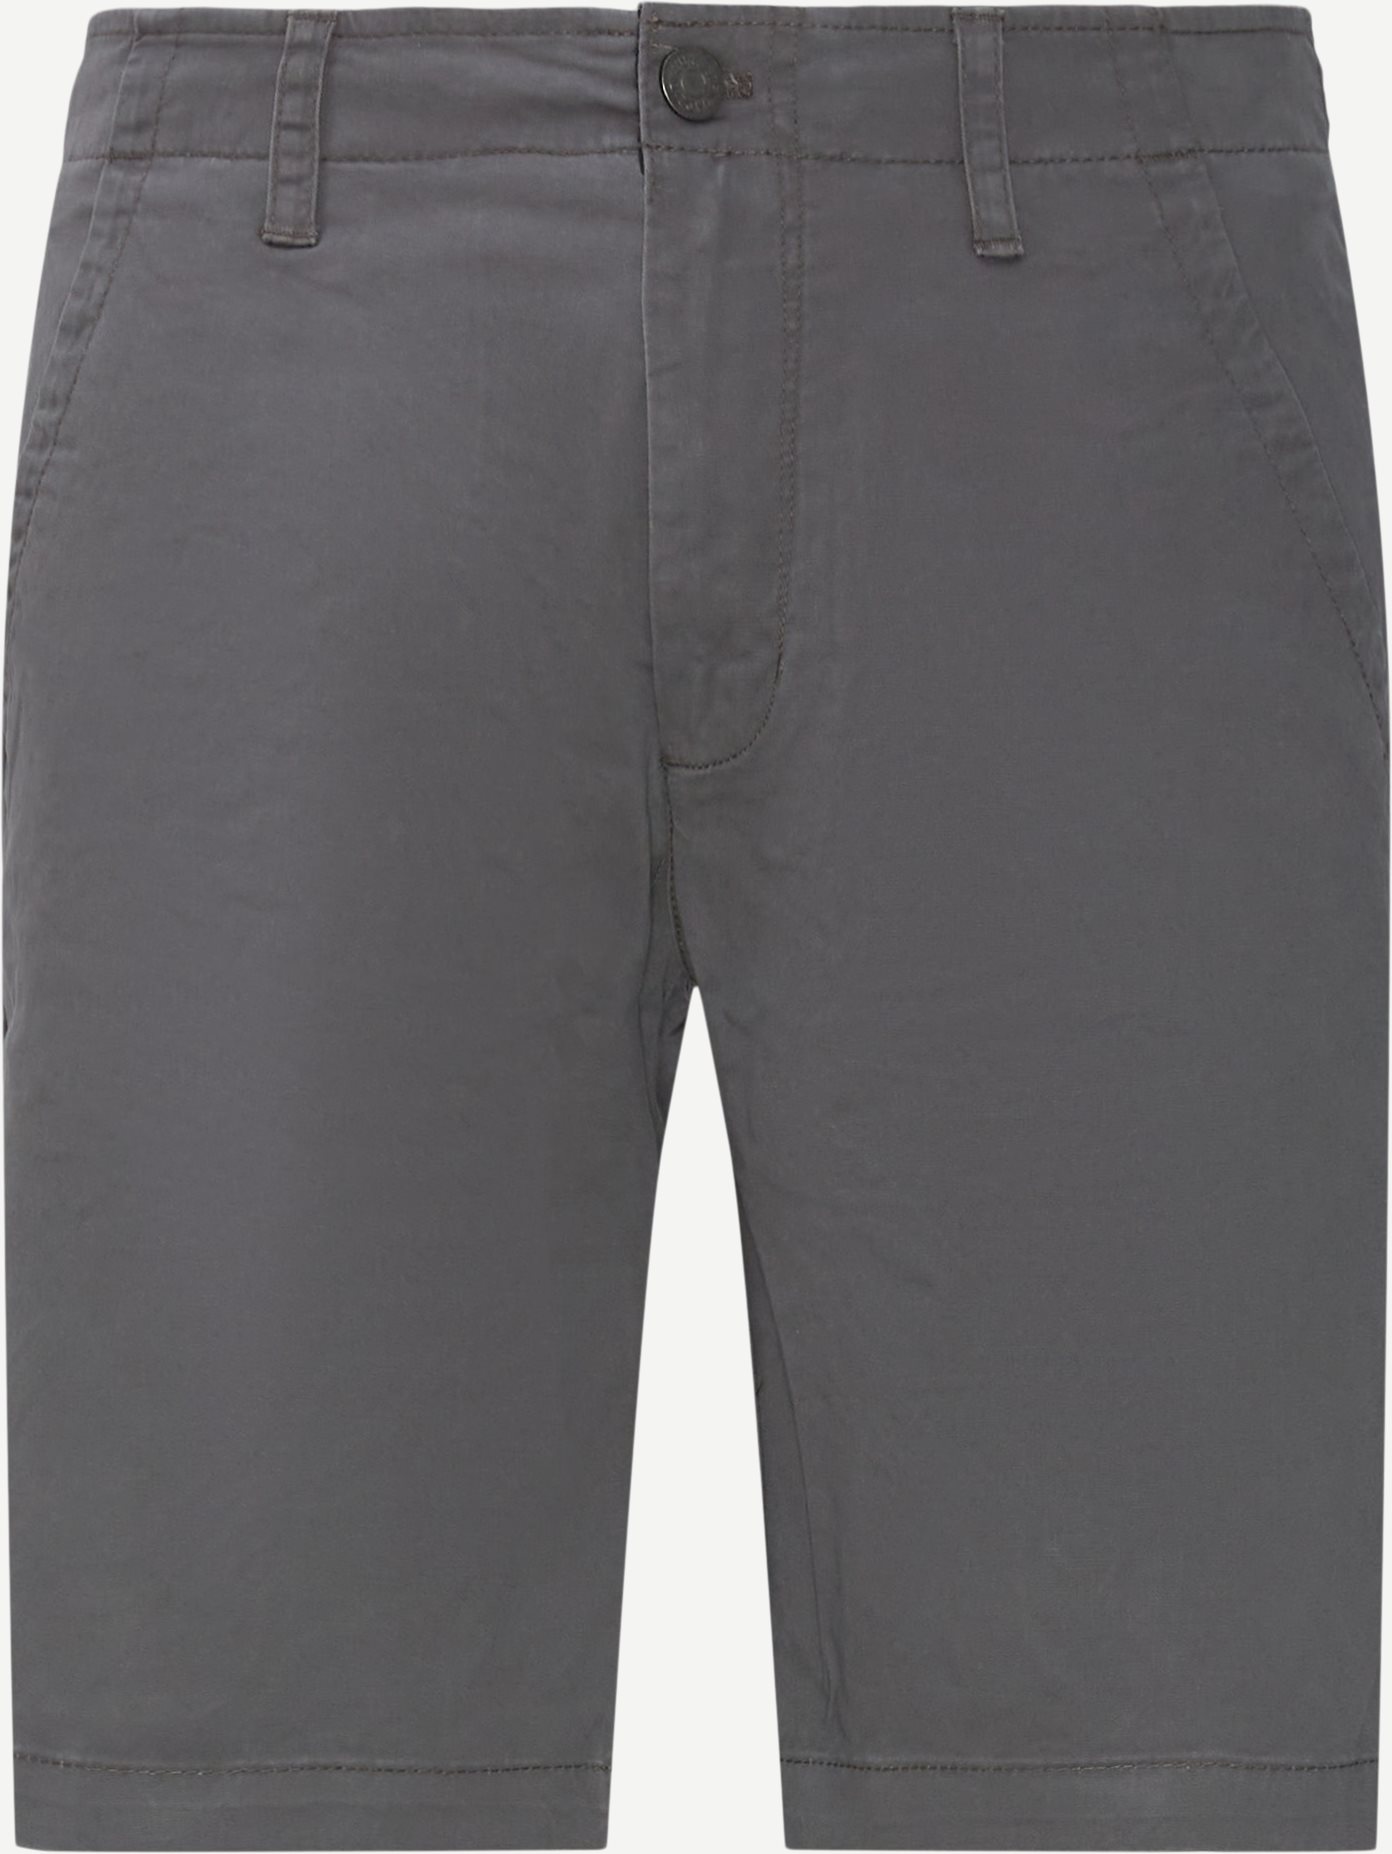 Shorts - Regular fit - Grey